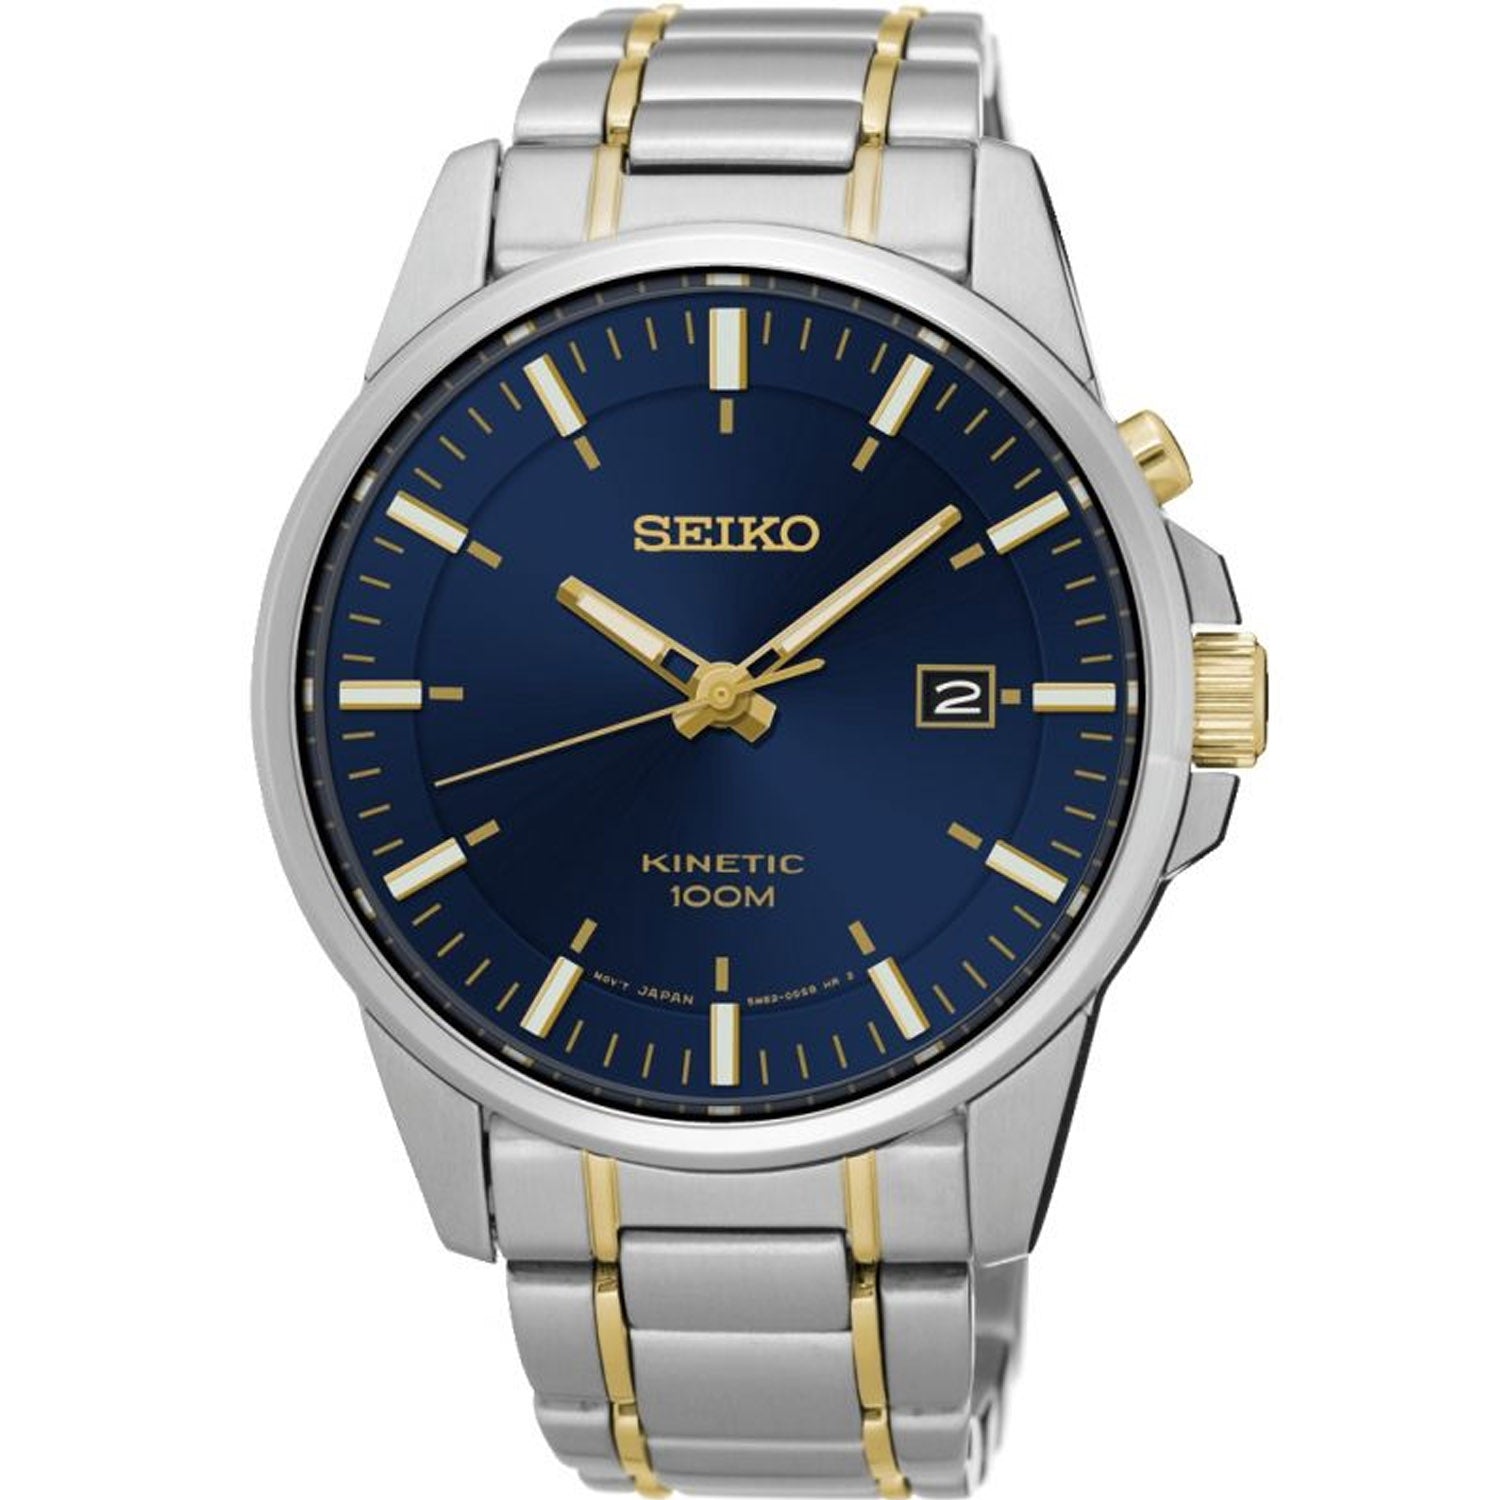 Seiko PROSPEX Men's Two Tone Kinetic Watch SKA737P1 – Hemstock's Jewellers